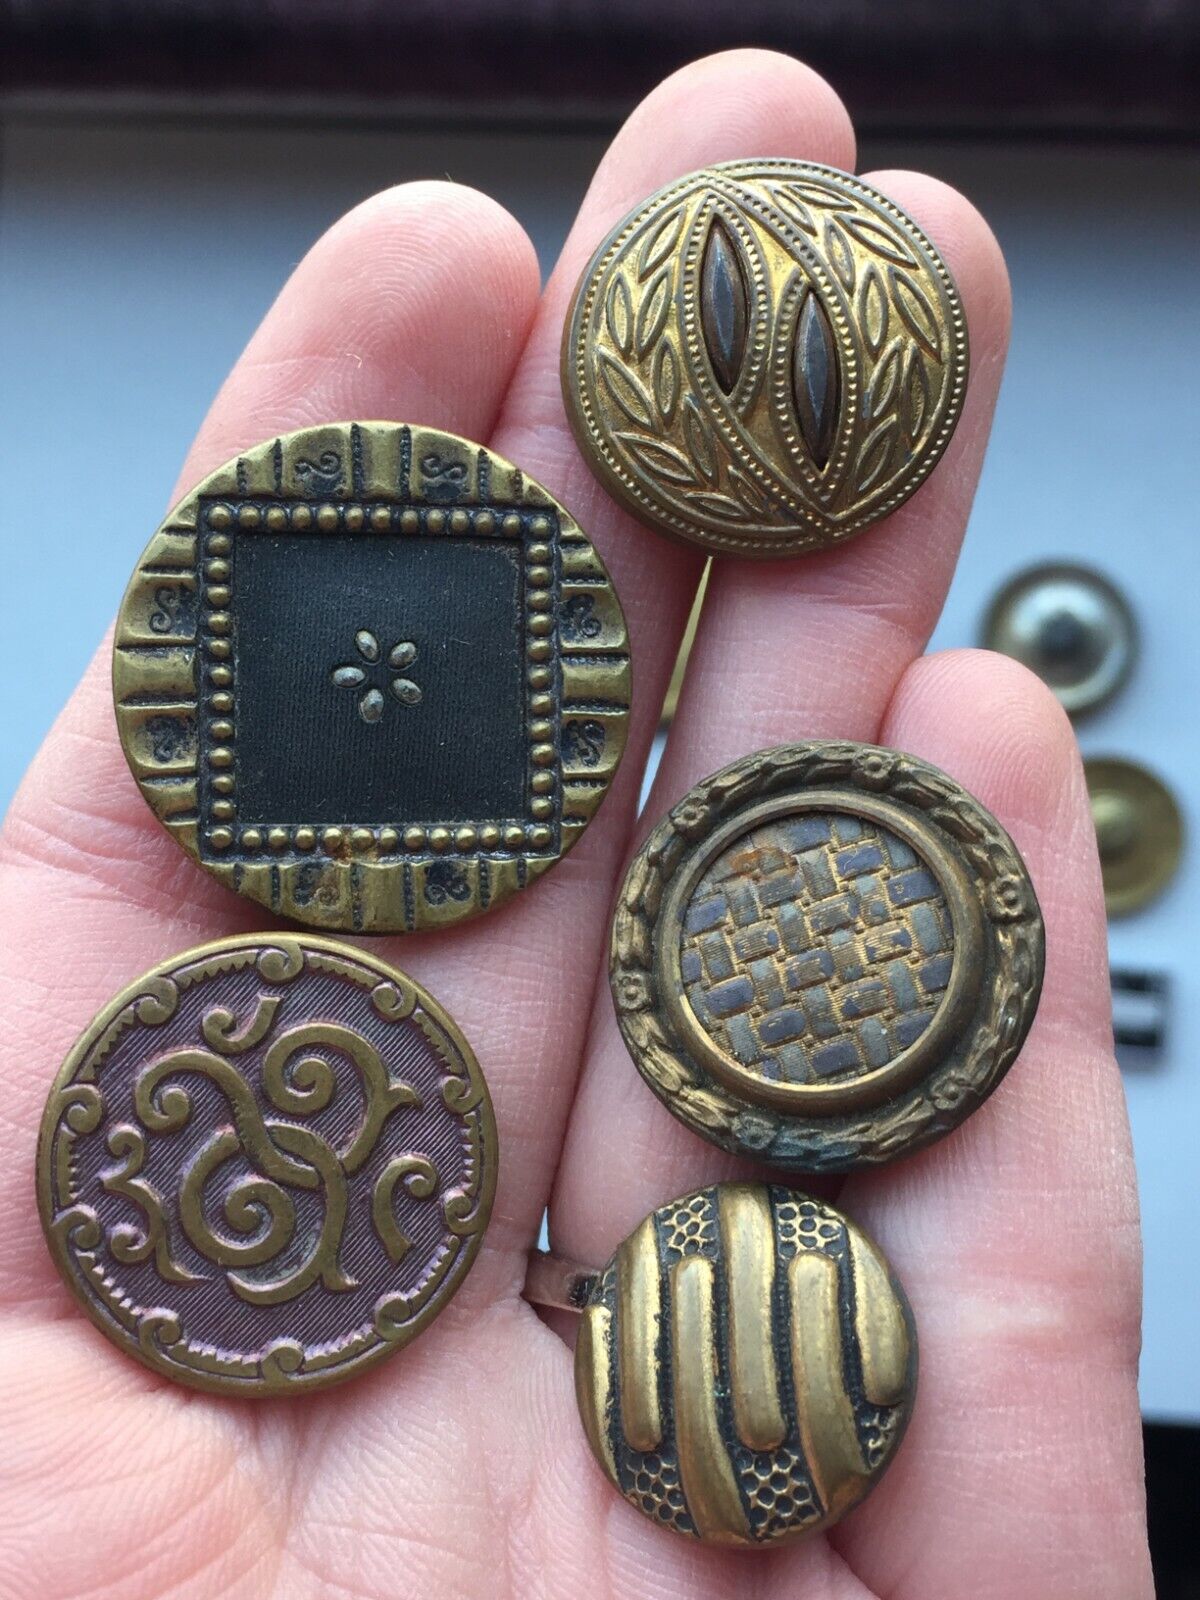 Lot of 9 antique metal buttons picture cut steel tinted deco nouveau Без бренда - фотография #2